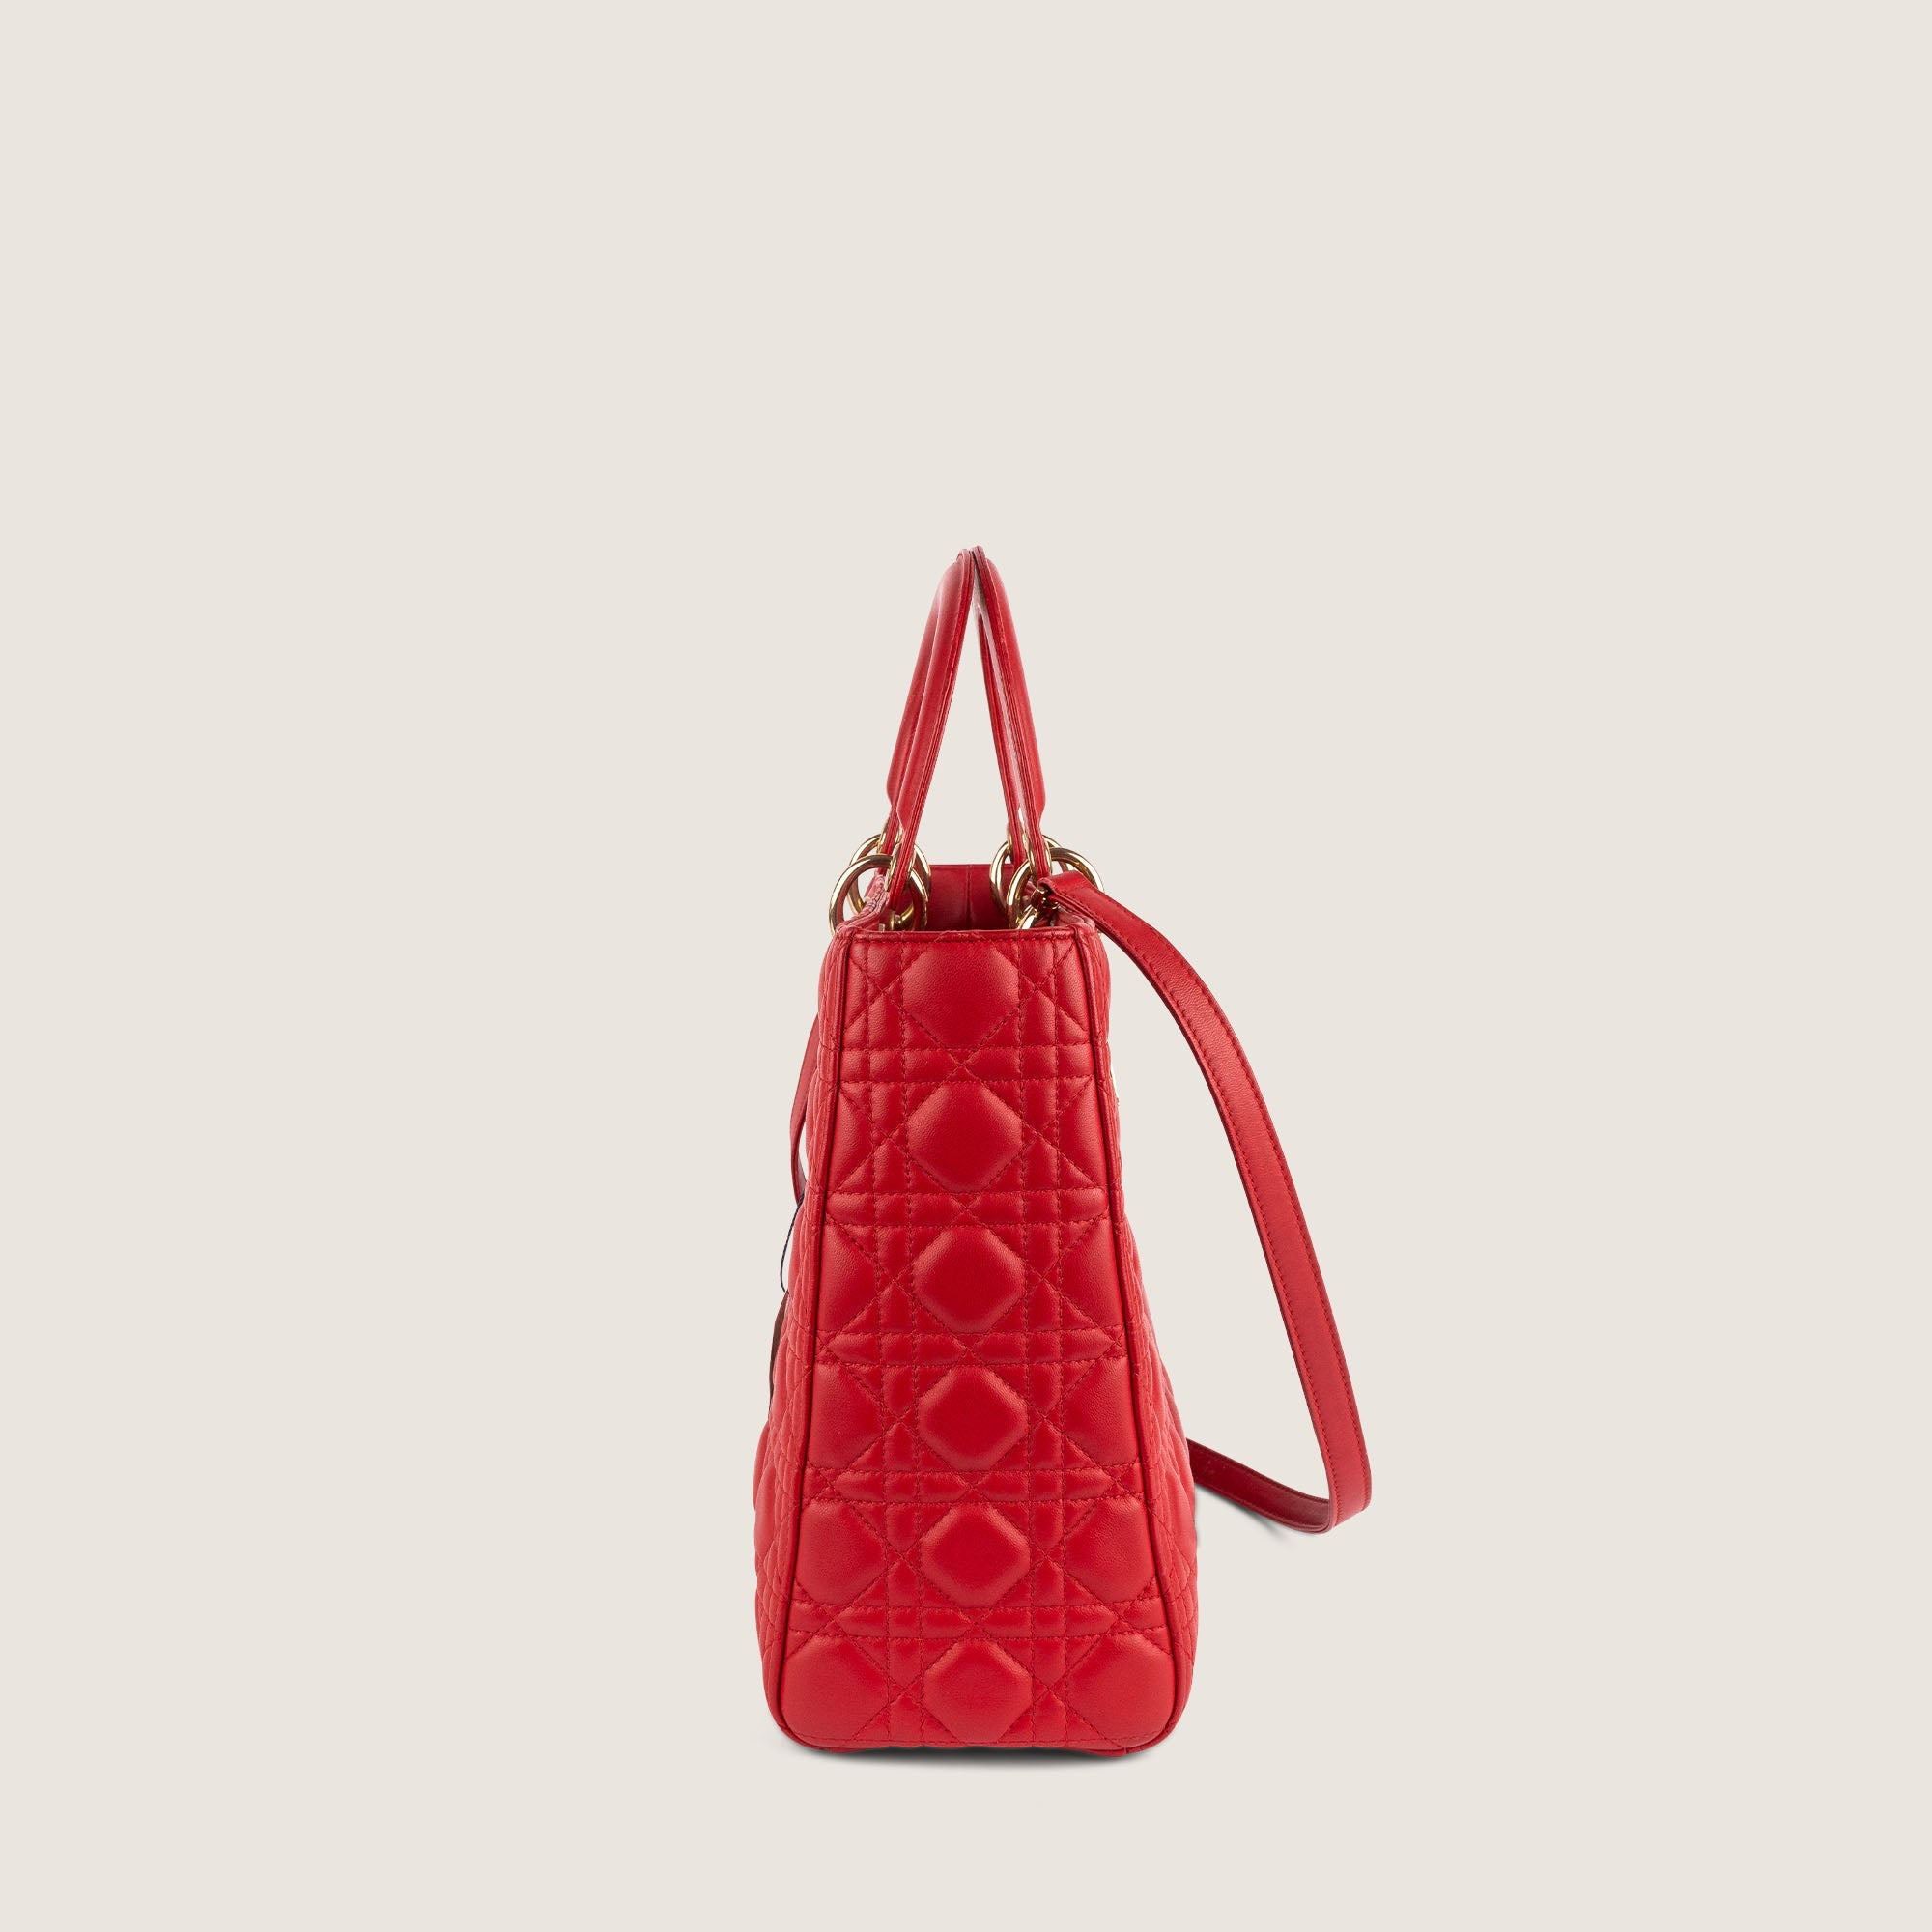 Large Lady Dior Handbag - CHRISTIAN DIOR - Affordable Luxury image